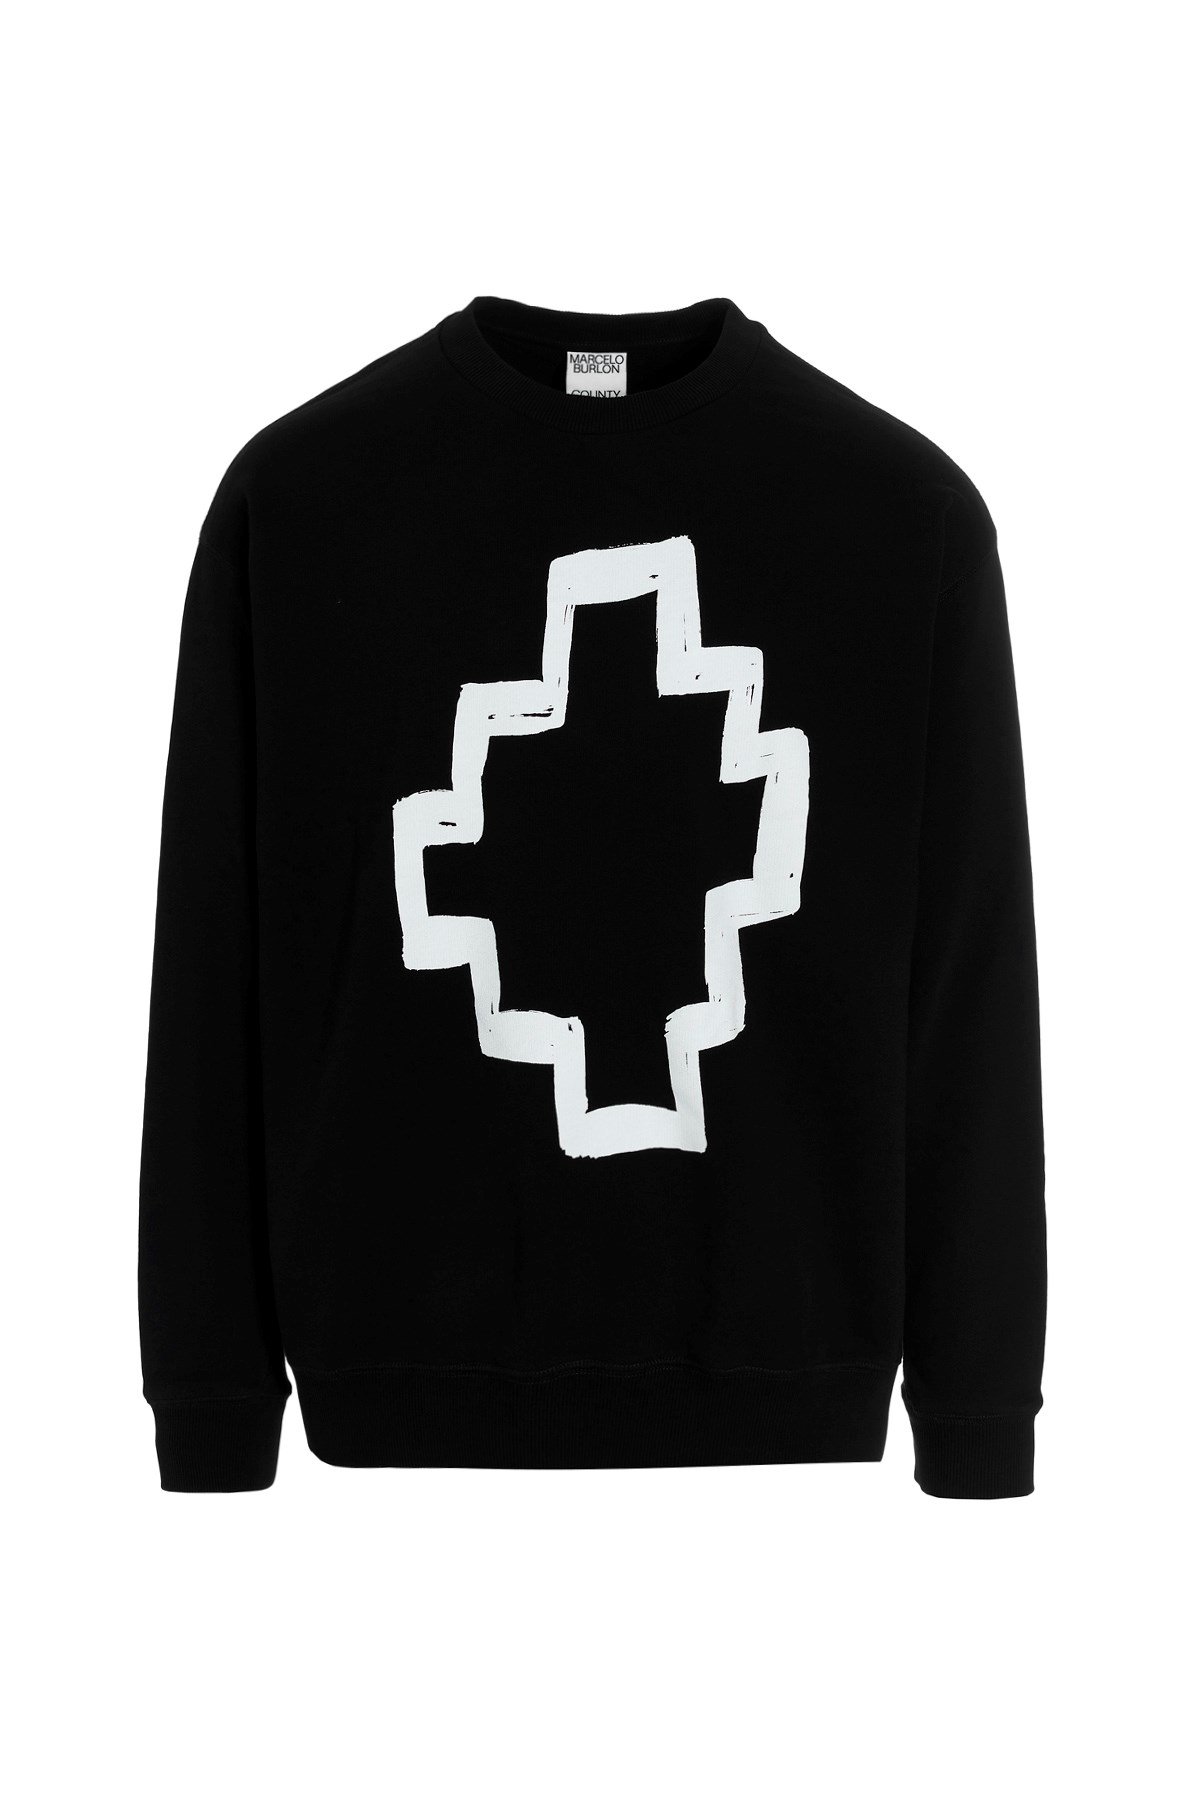 MARCELO BURLON - COUNTY OF MILAN 'Tempera Cross' Sweatshirt